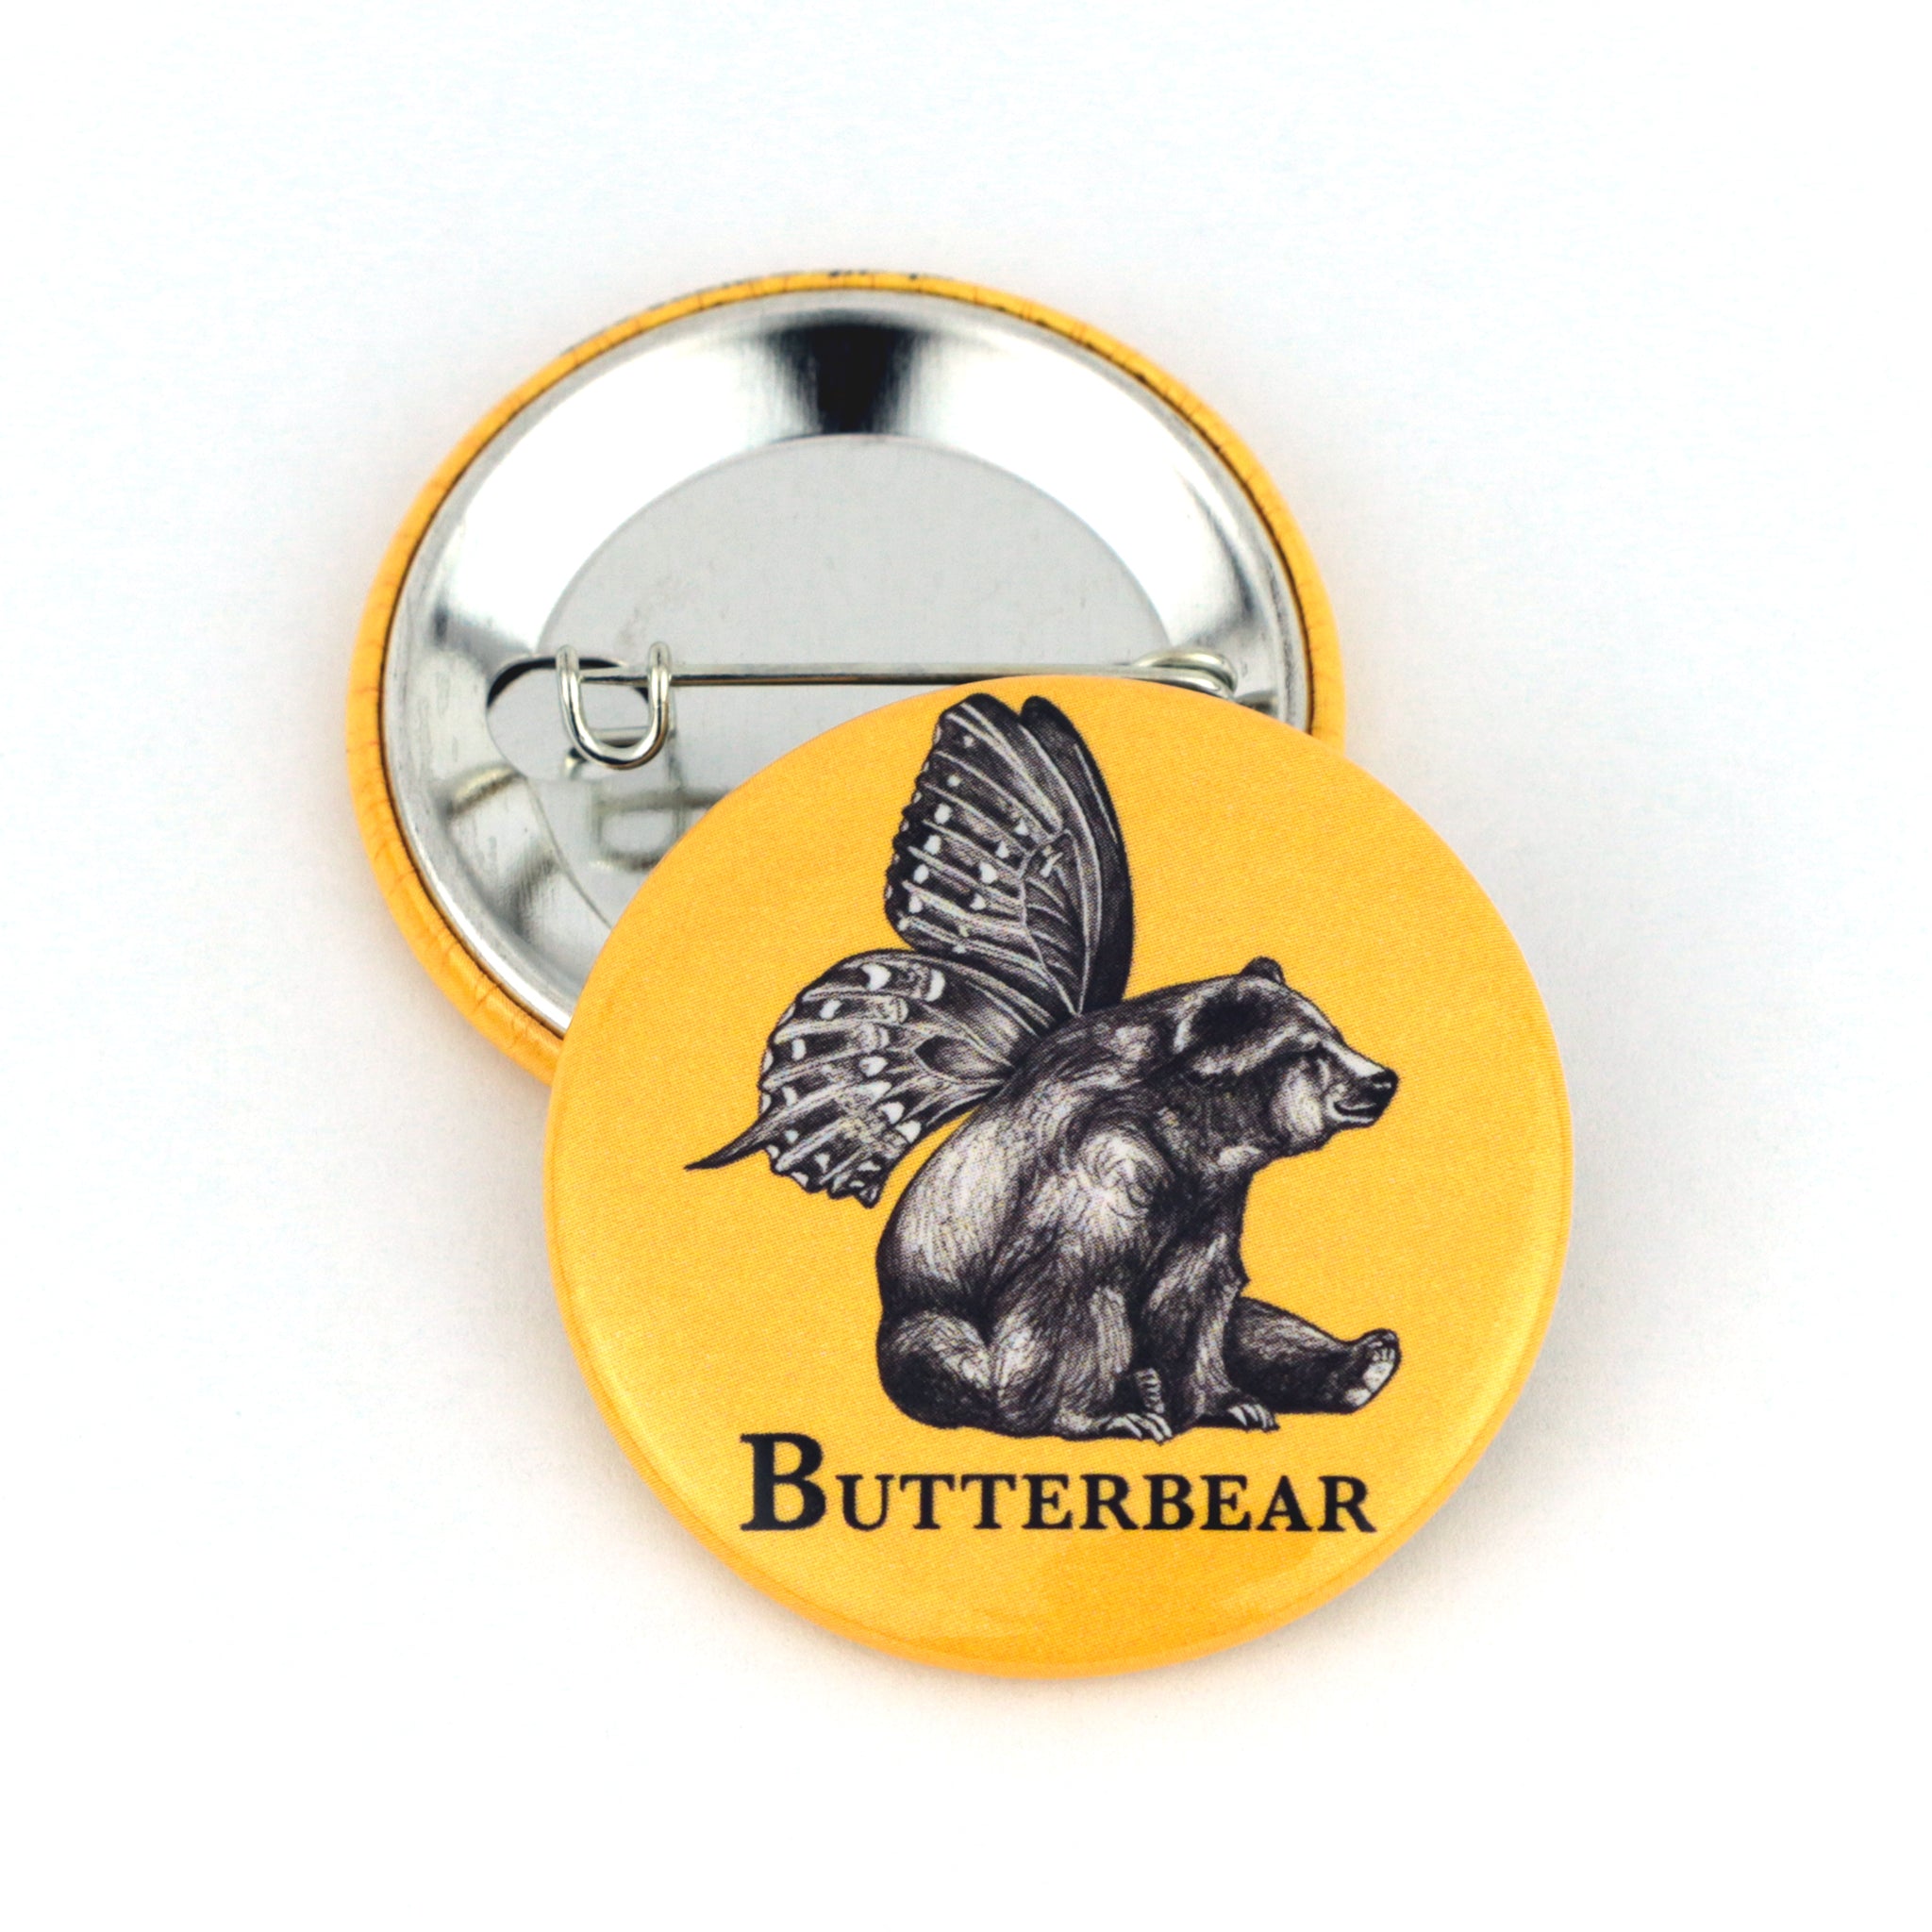 Butterbear | Butterfly + Bear Hybrid Animal | 1.5" Pinback Button